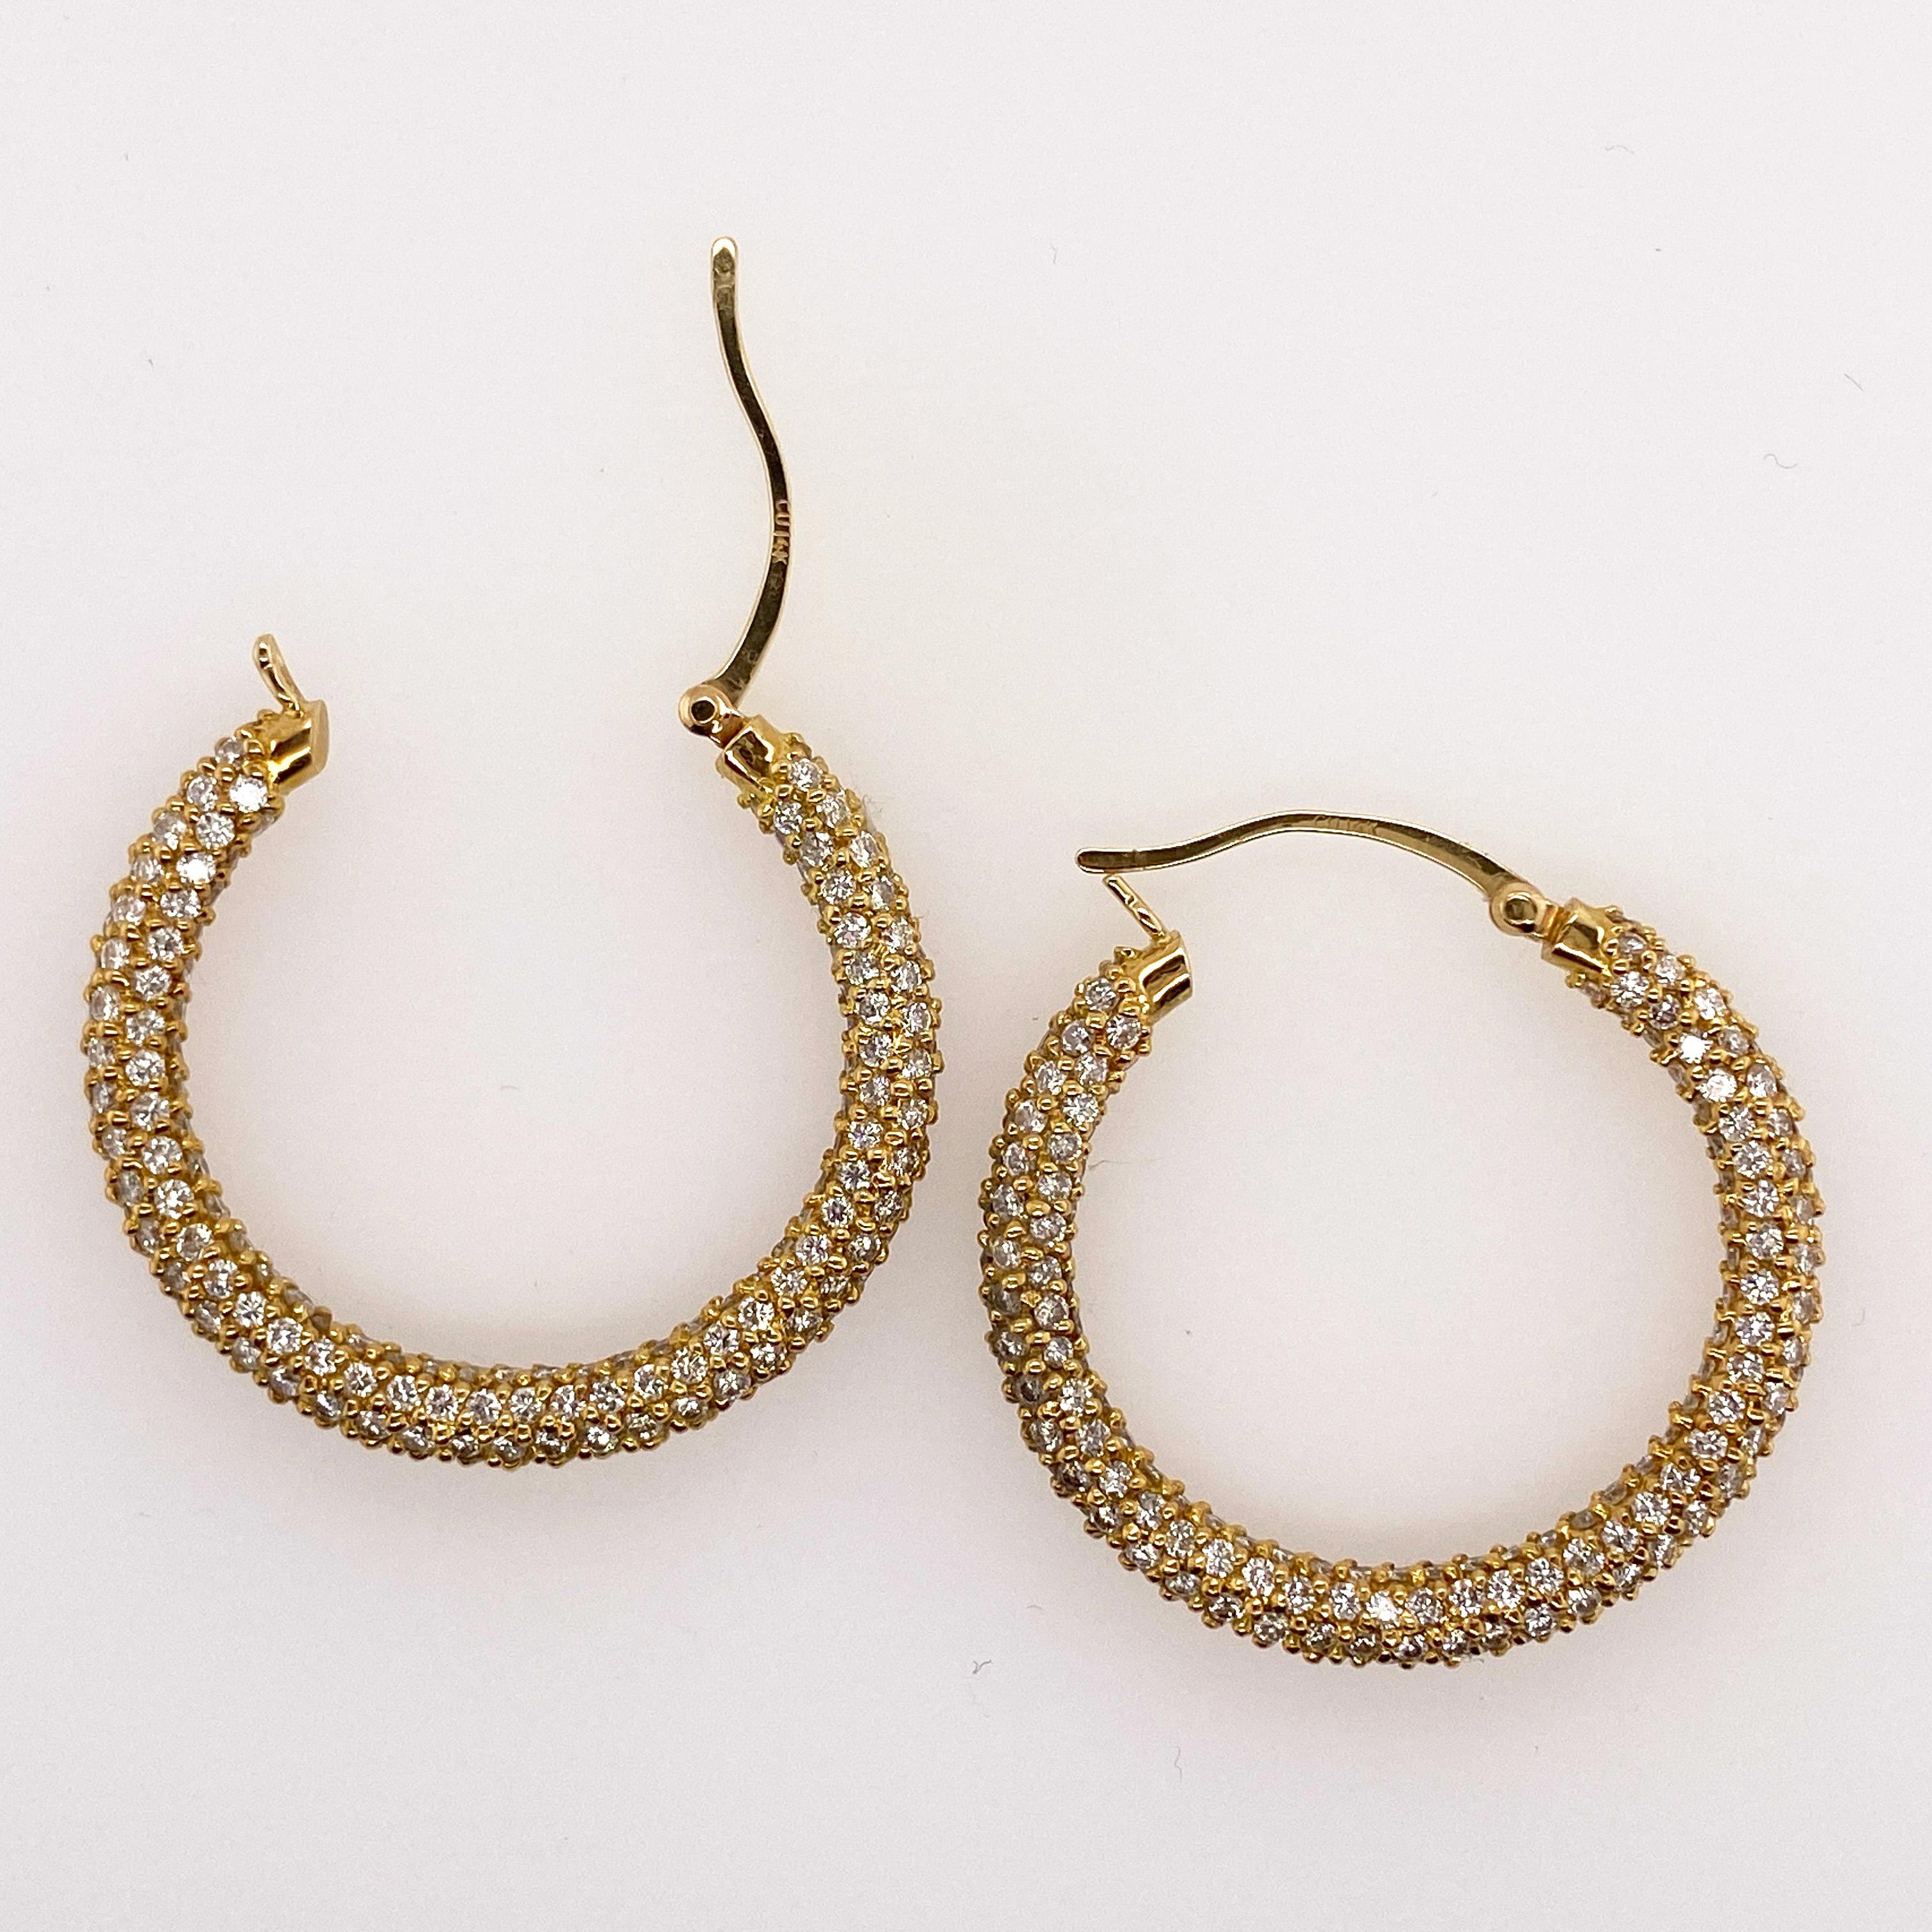 Round Cut 1.00 Carat Diamond Pavé Hoop Earrings in 14k Yellow Gold